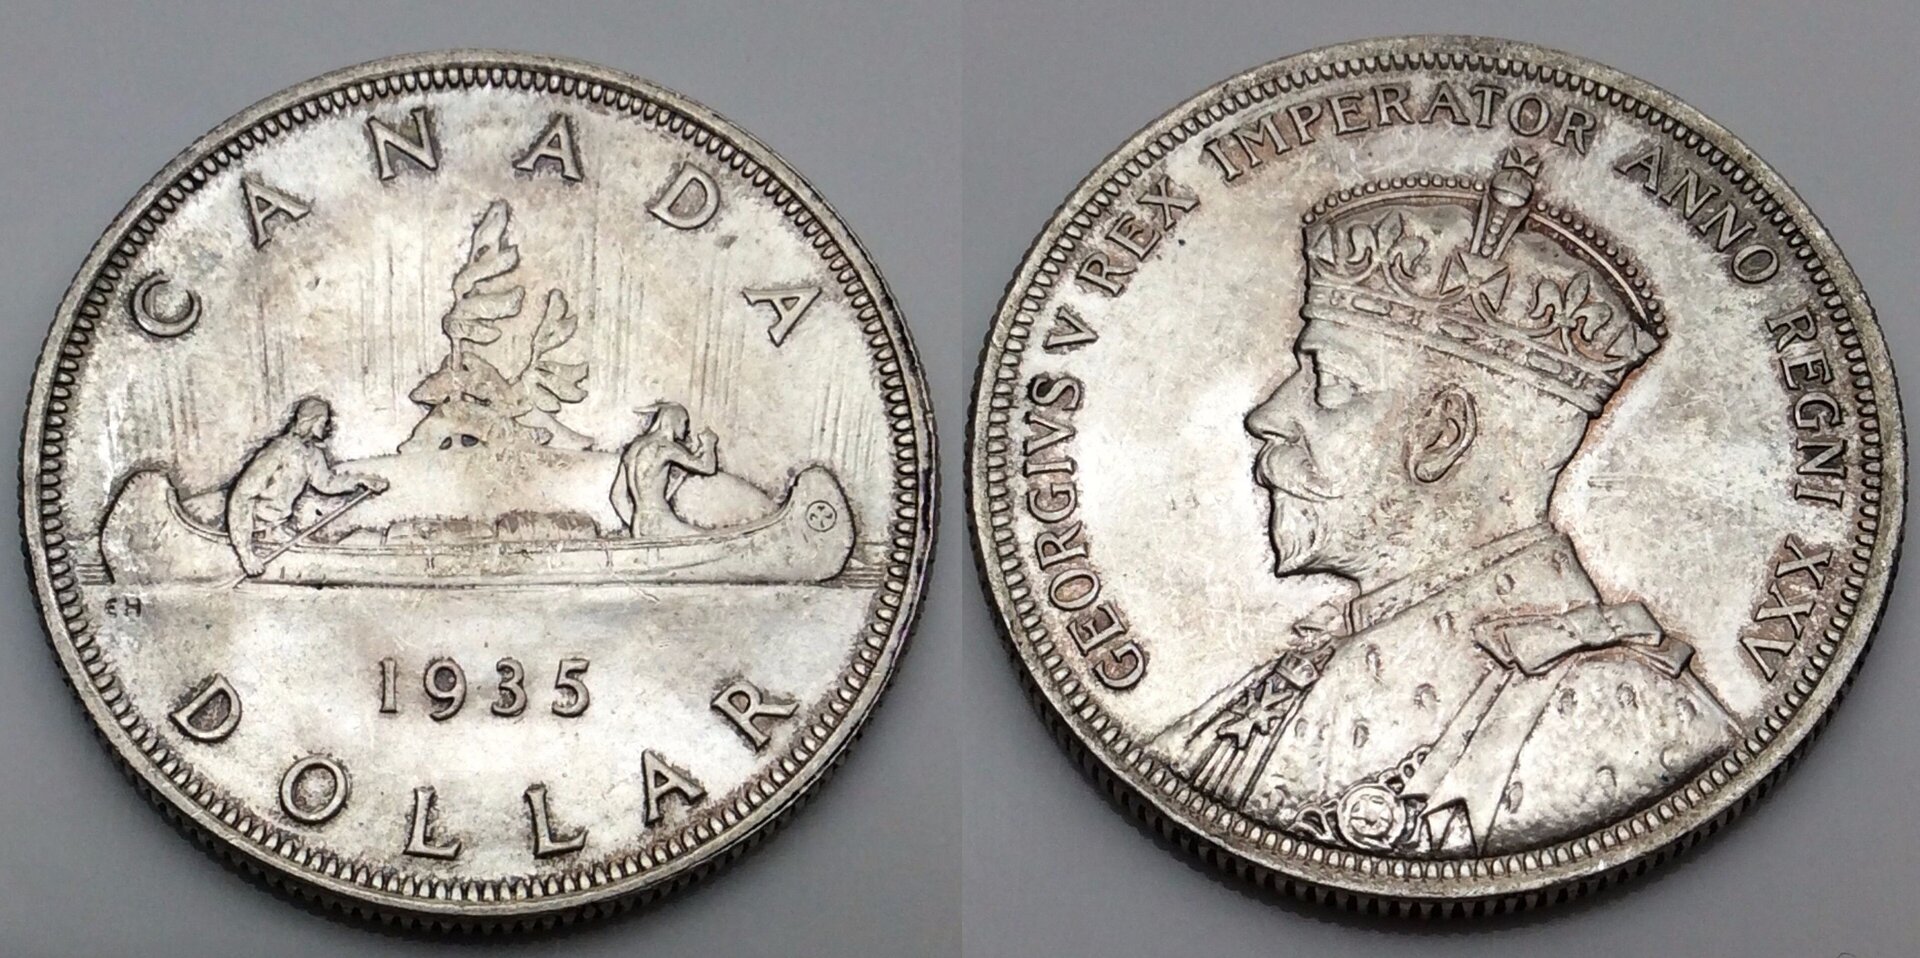 1935 Canada One Dollar 800 Silver Bu Coin   $50. + $5  292368875812 nordev .jpg